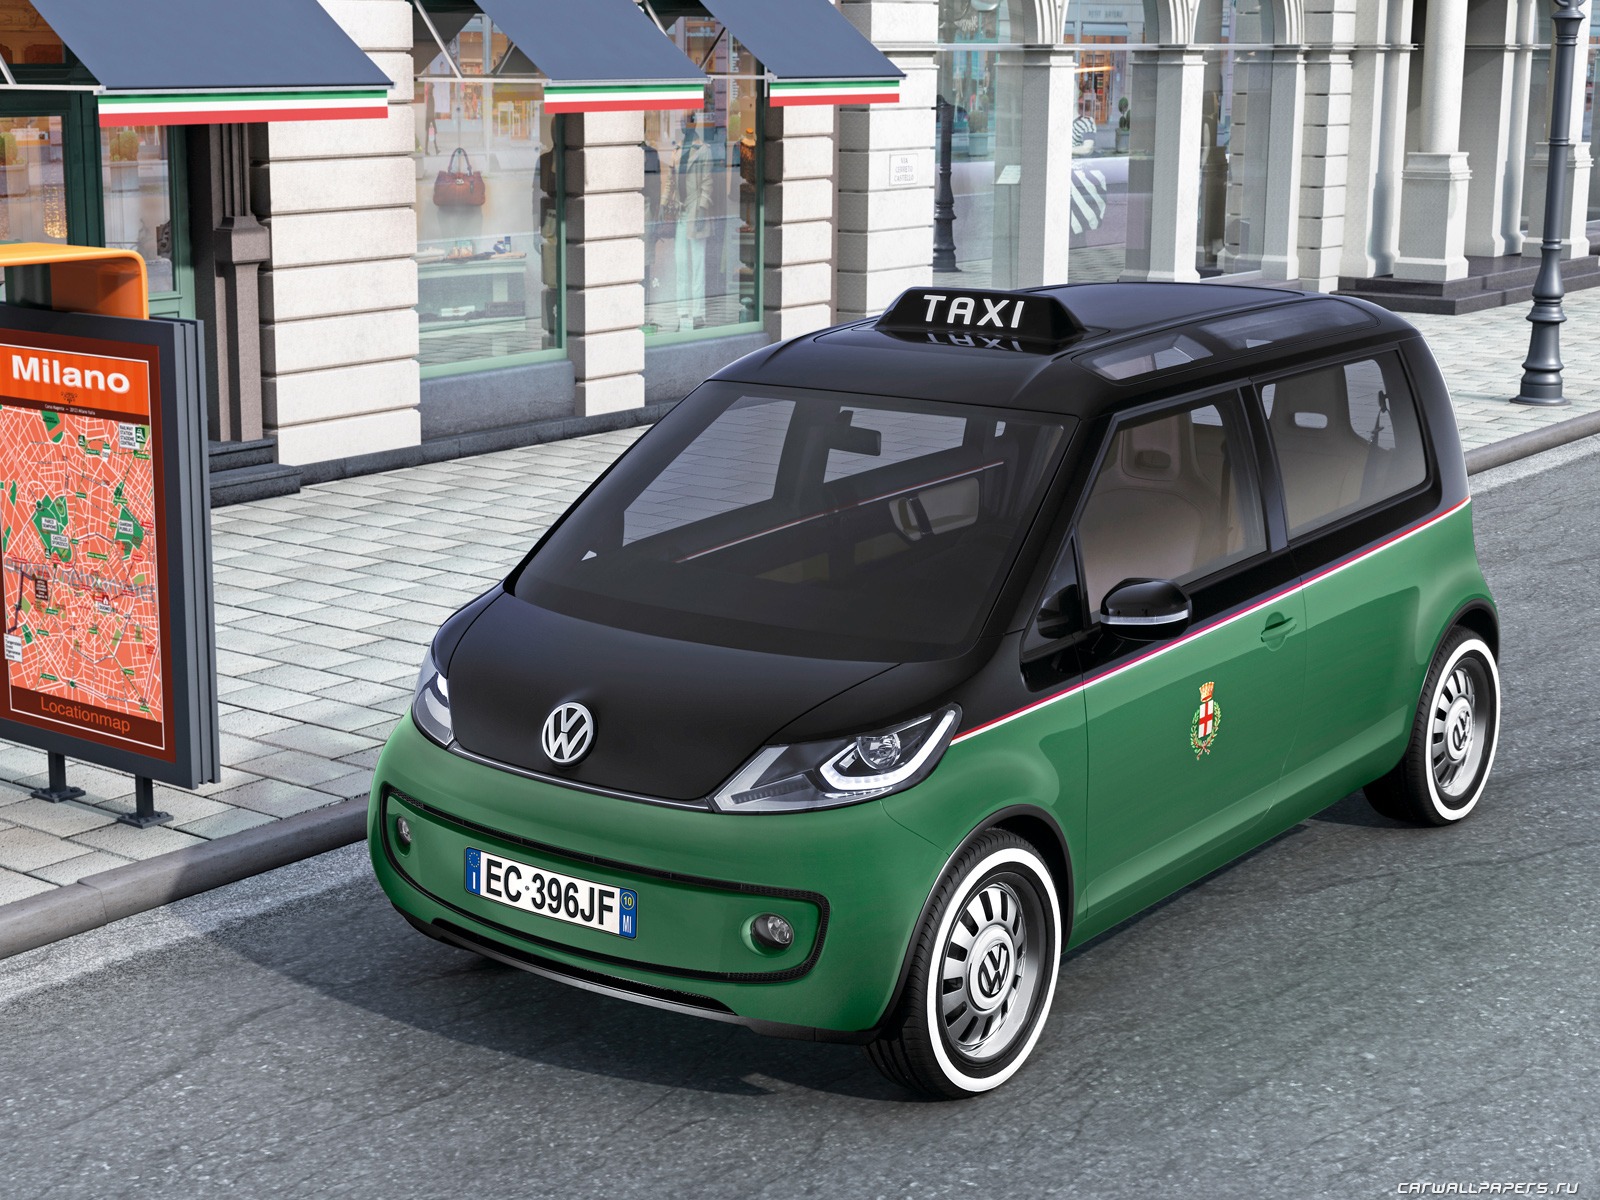 Concept Car Volkswagen Milano Taxi - 2010 大眾 #2 - 1600x1200